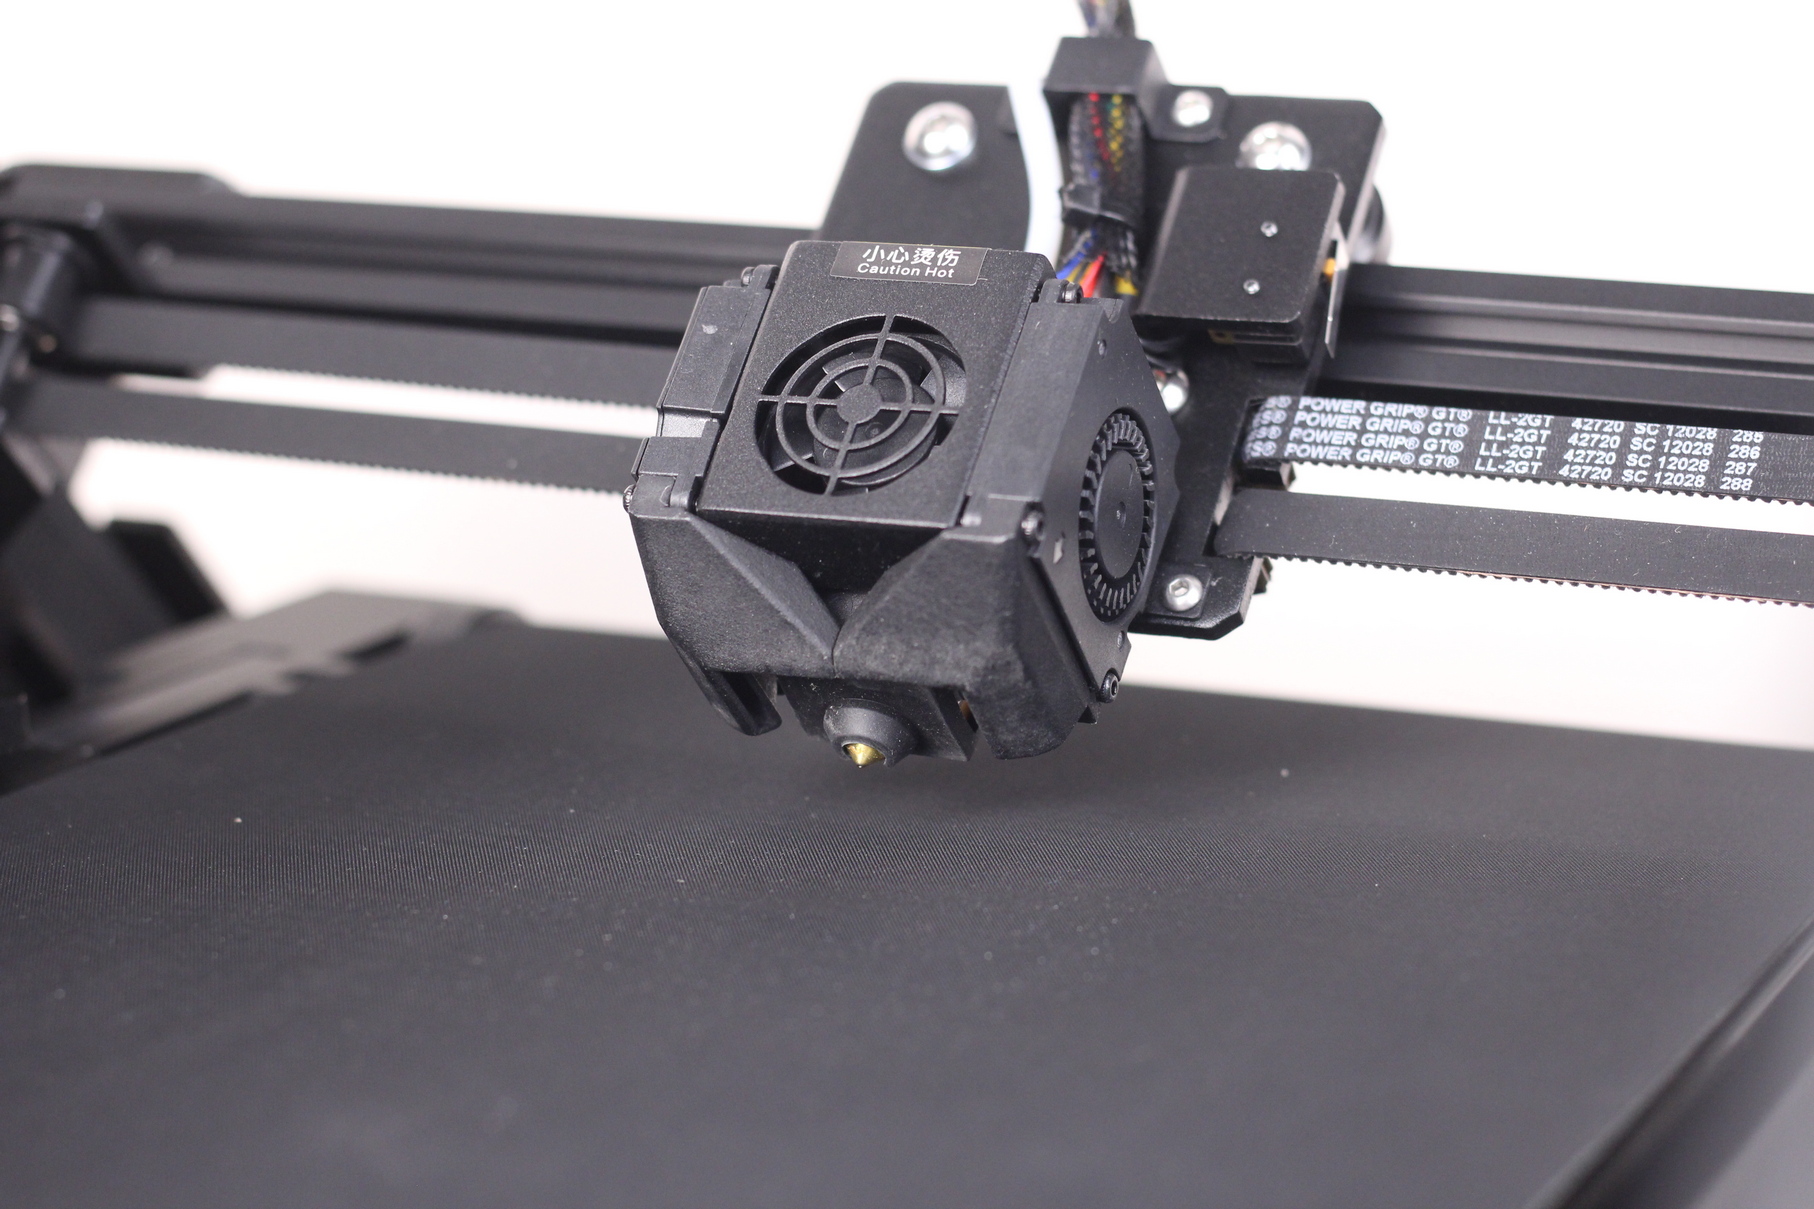 Creality CR 30 printhead | Creality 3DPrintMill (CR-30) Review: Belt Printer for Batch 3D Printing